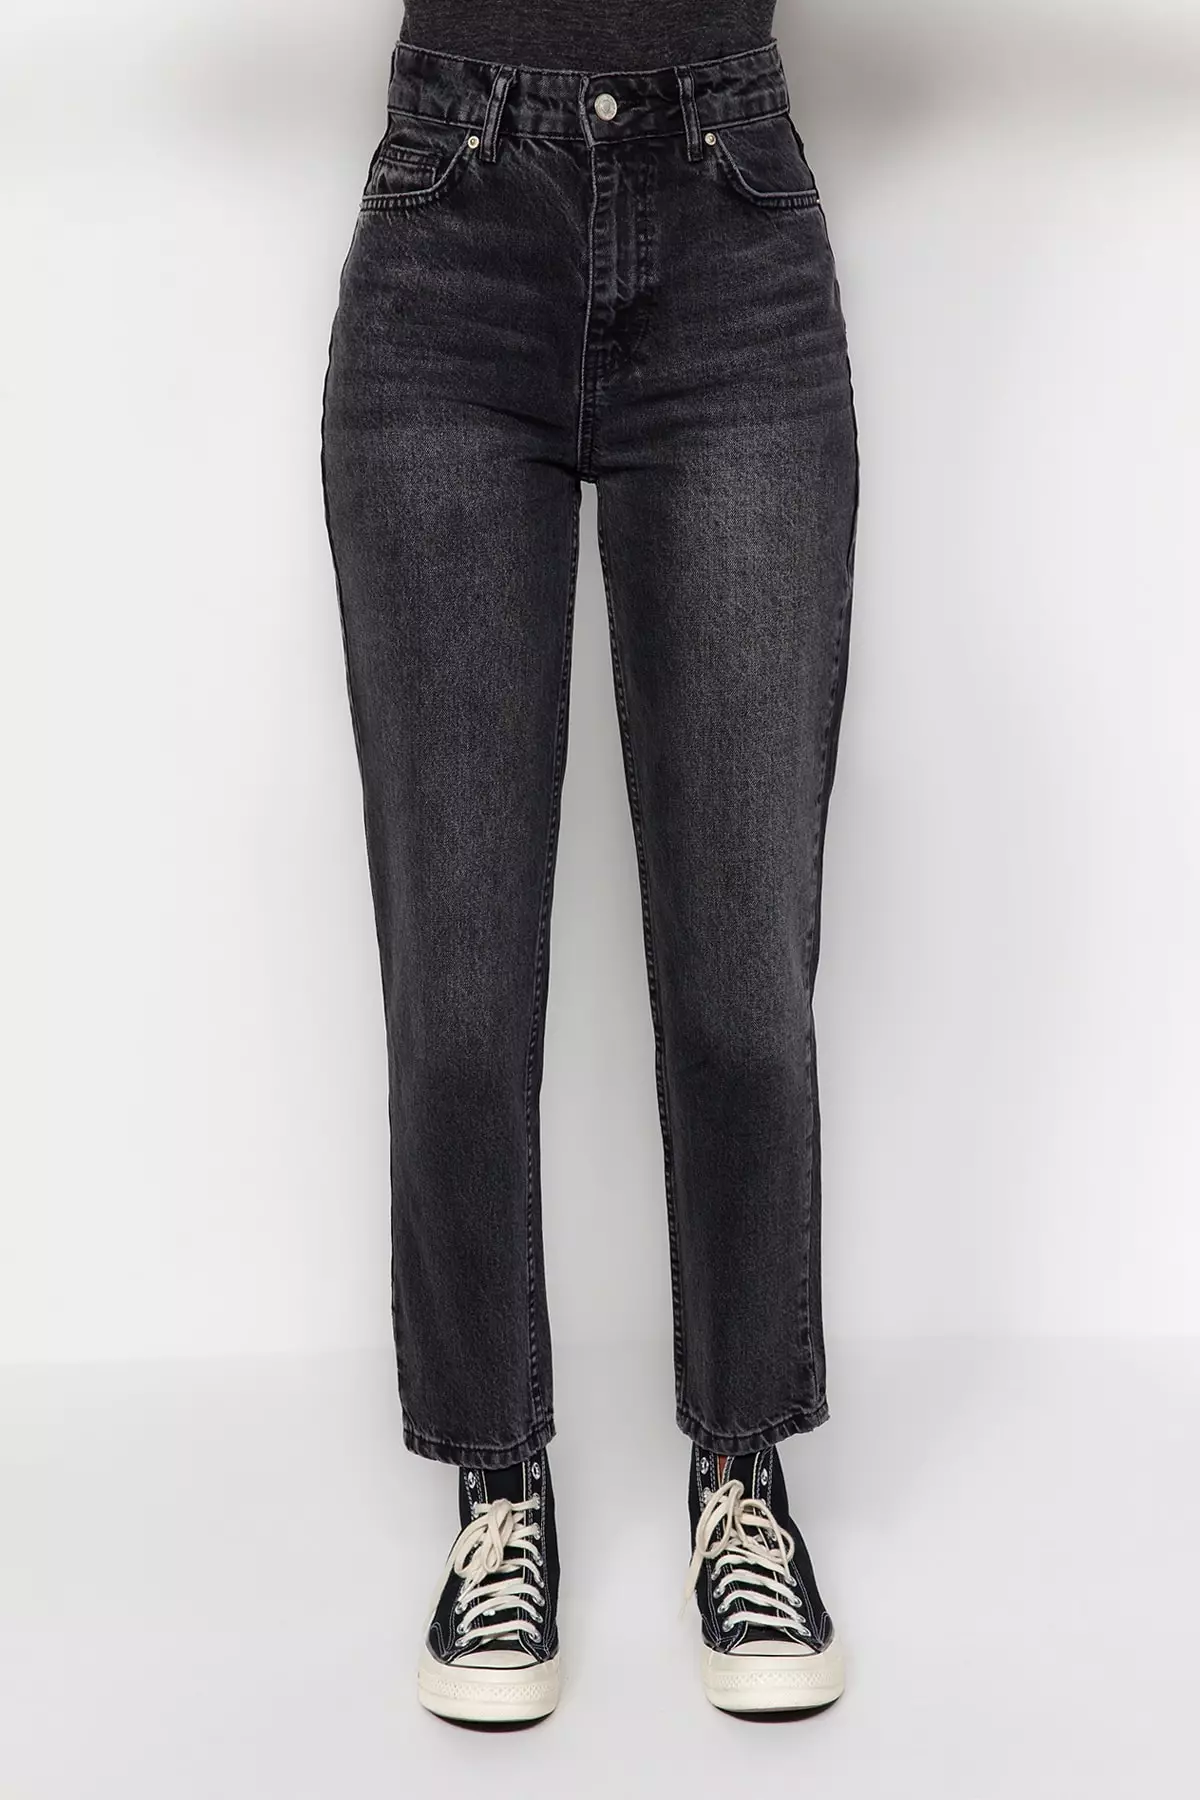 denim black High-waisted Mom jeans - Buy Online